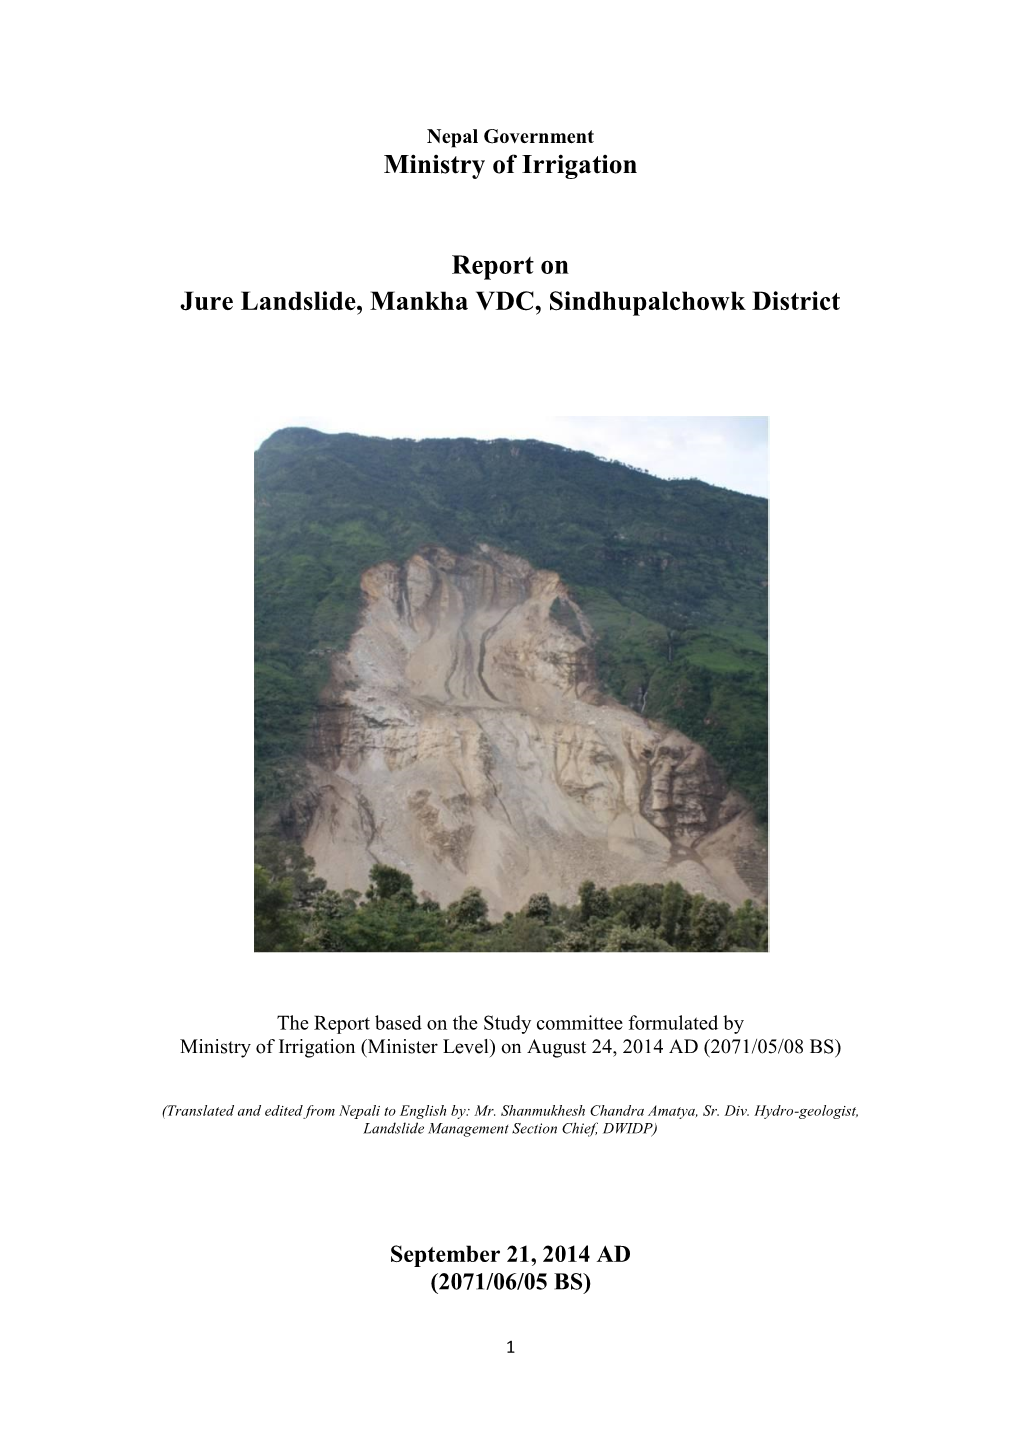 Report on Jure Landslide, Mankha VDC, Sindhupalchowk District